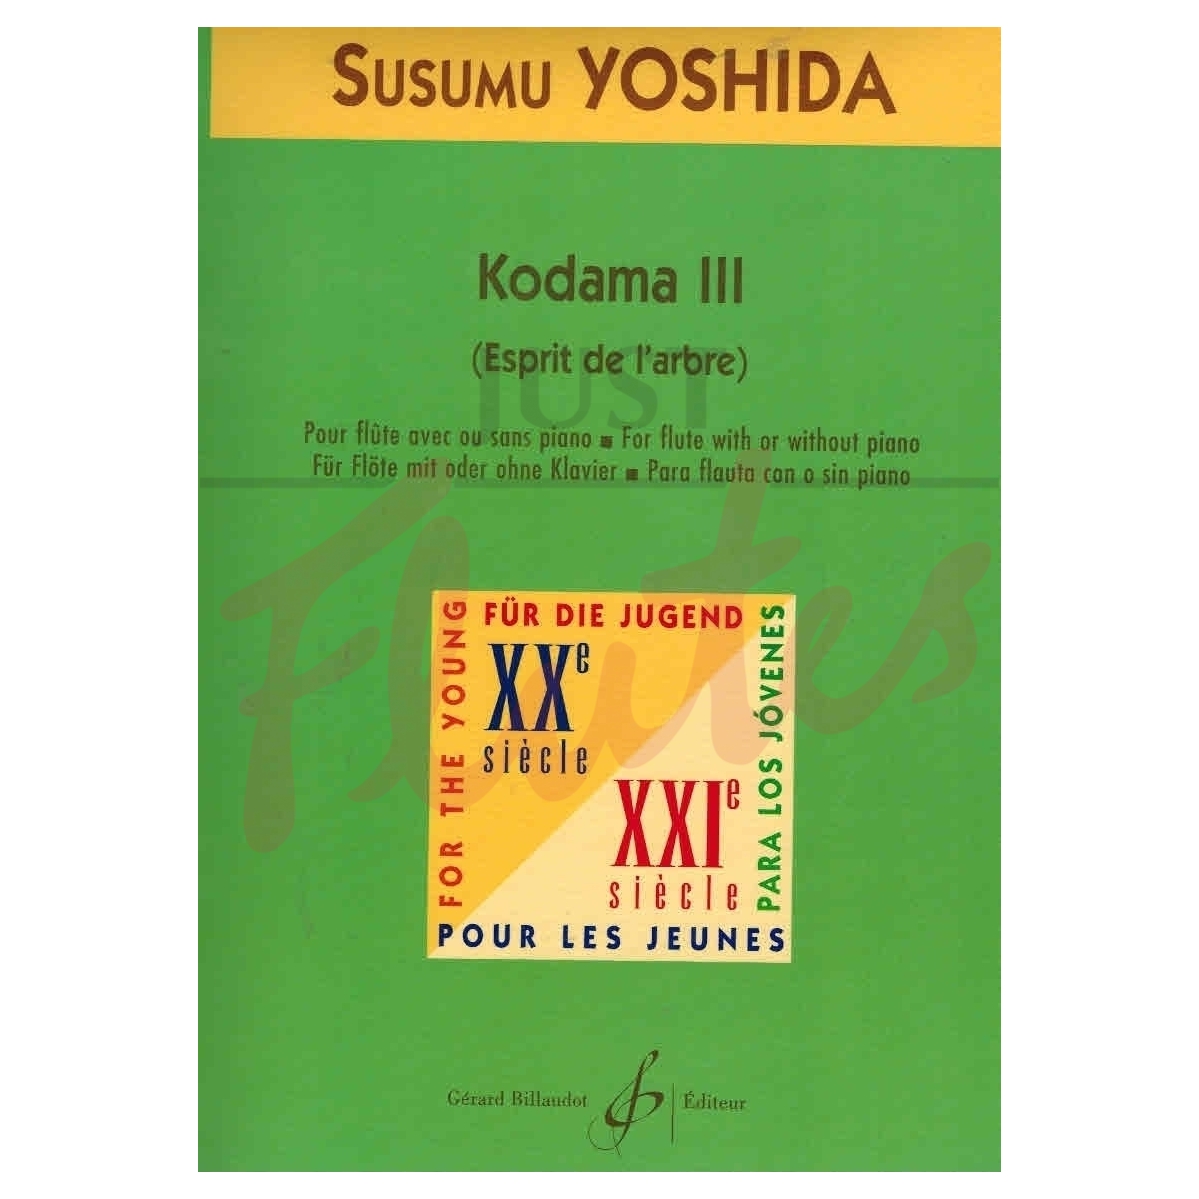 Kodama III (Esprit de l'arbre)